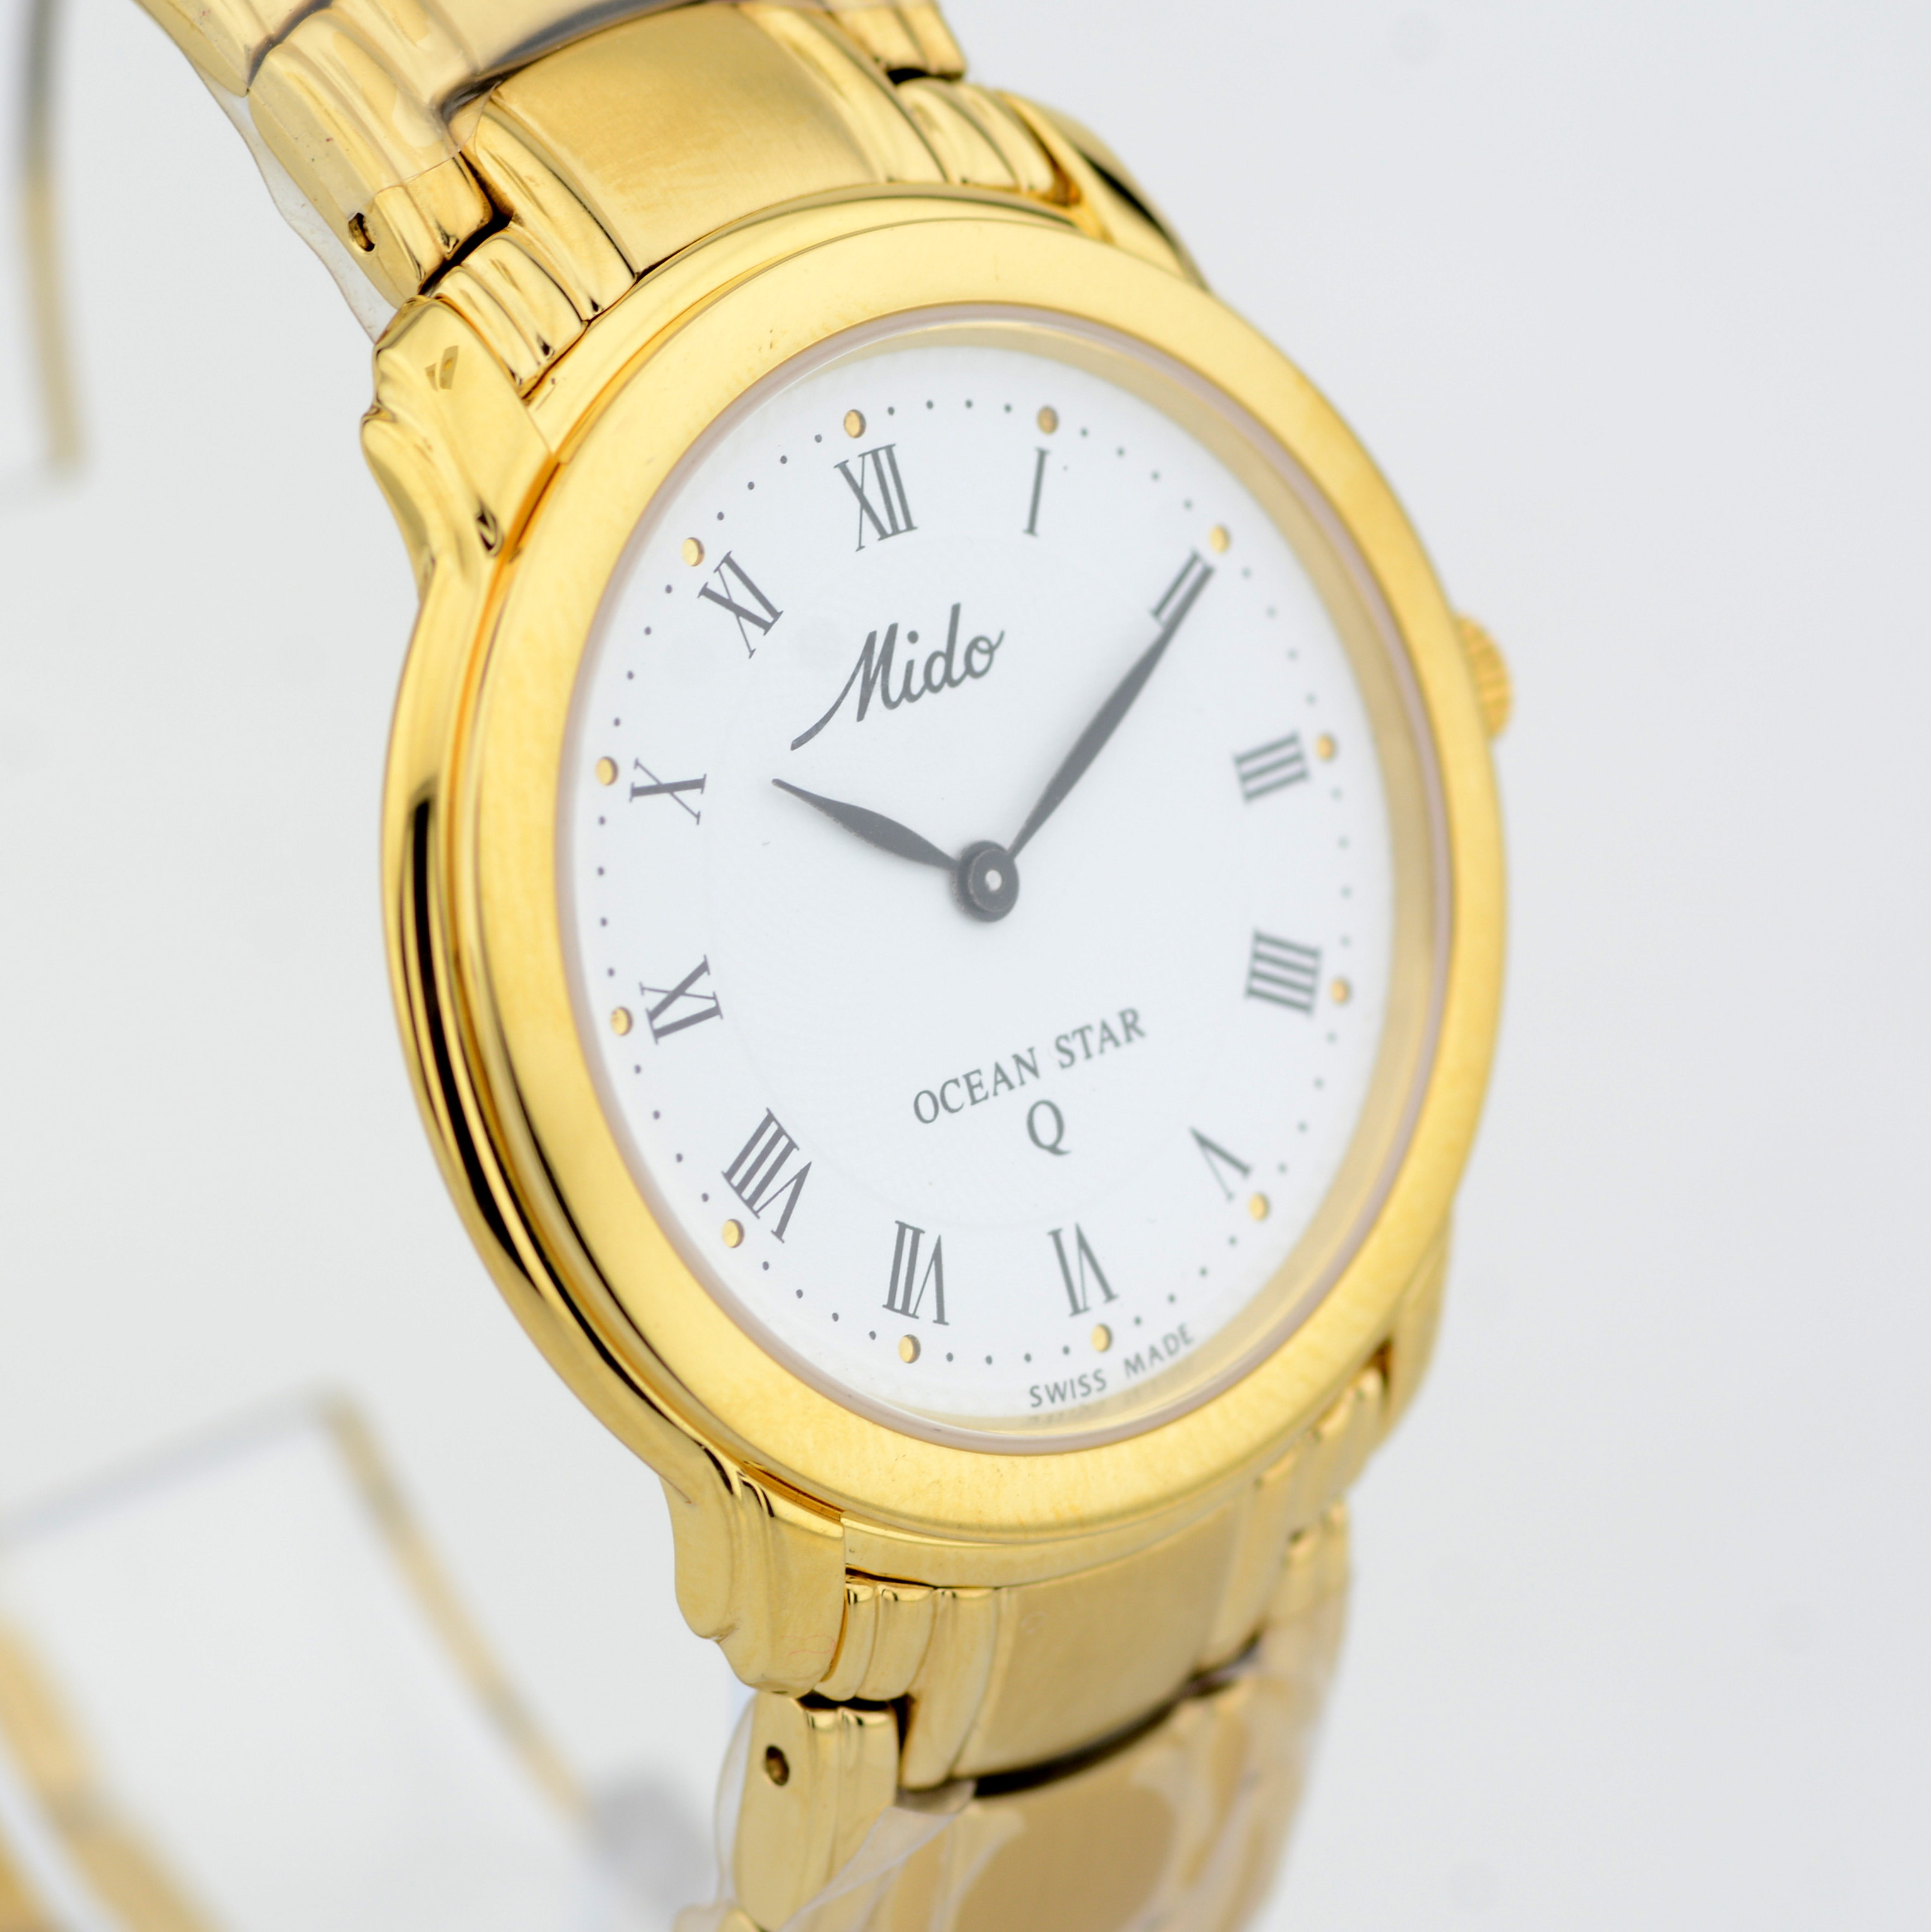 Mido / Ocean Star Automatic - (Unworn) Gentlmen's Gold-plated Wrist Watch - Image 5 of 7